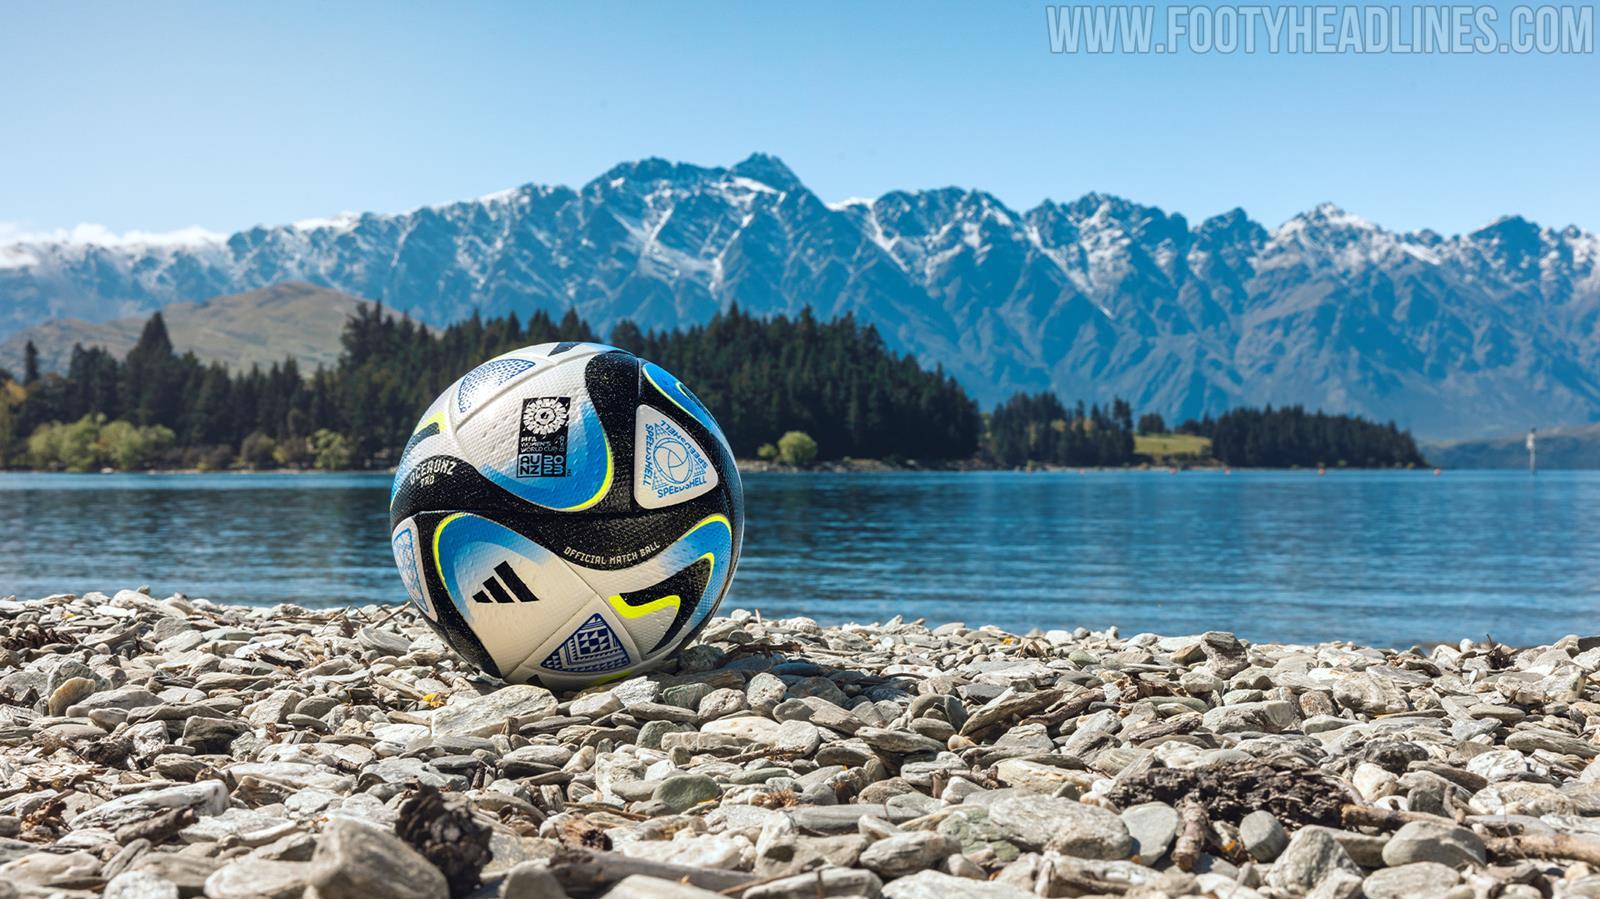 Adidas Oceaunz Women S World Cup Ball Released Footy